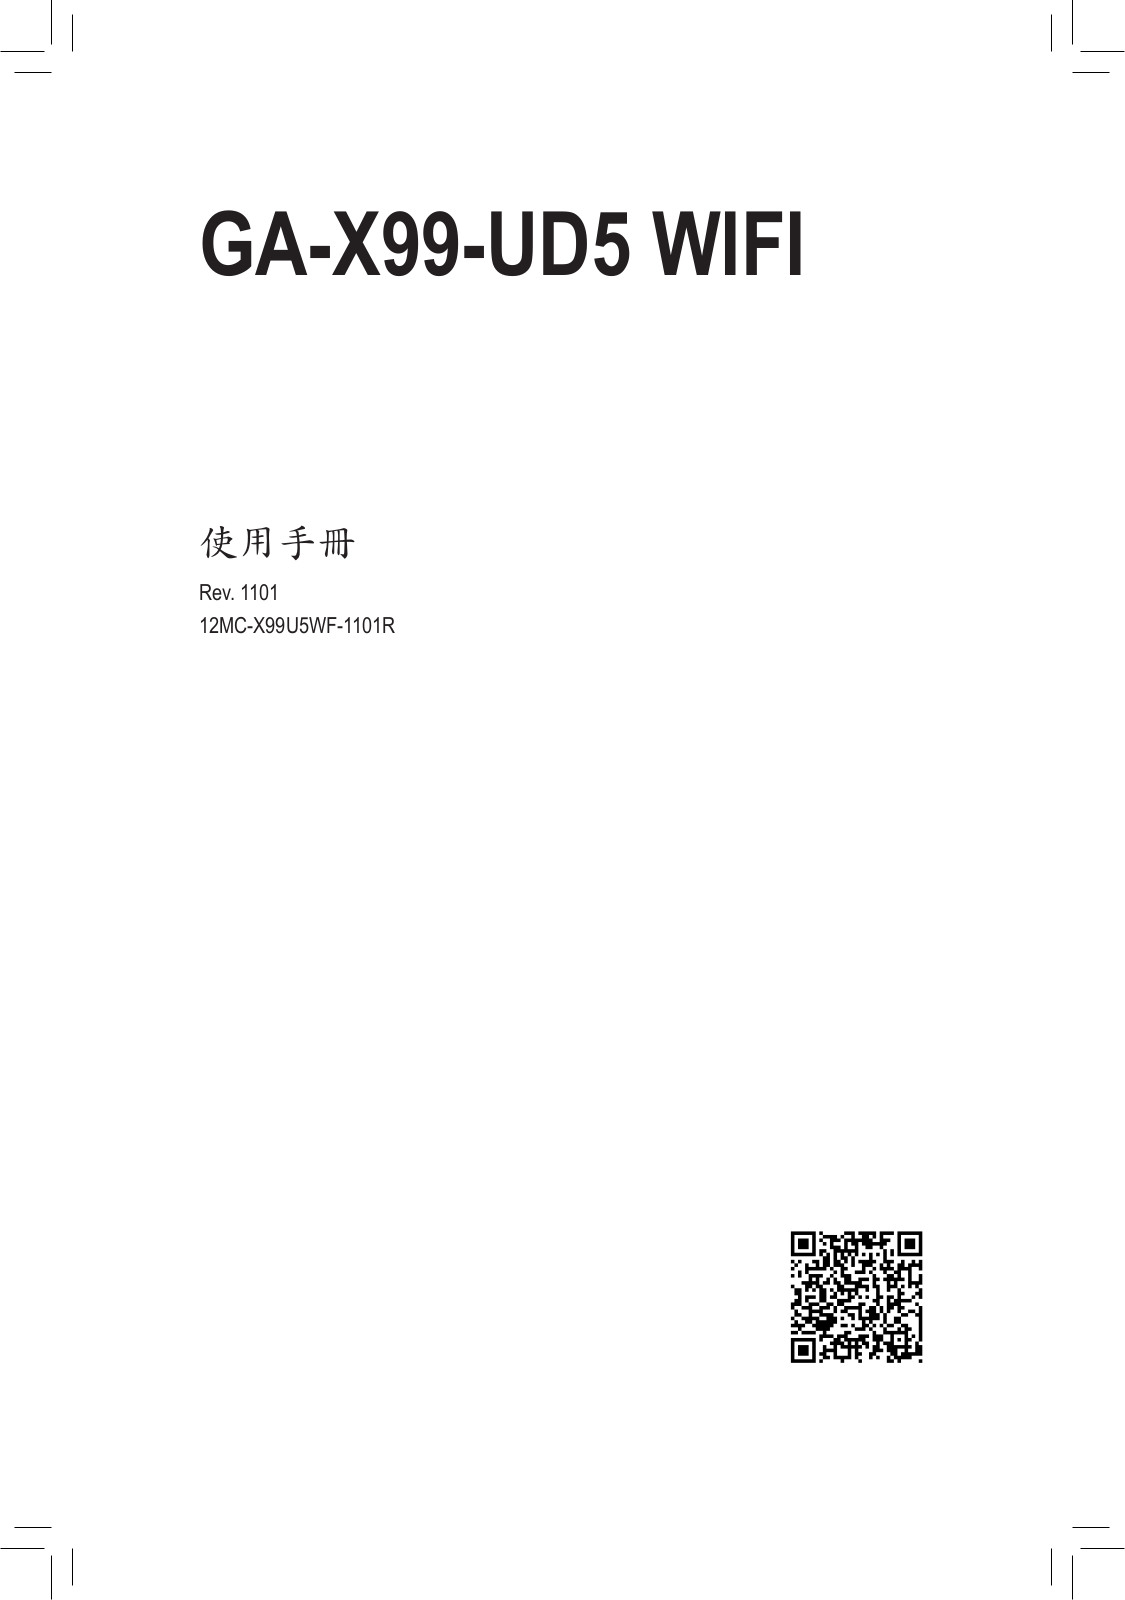 Gigabyte GA-X99-UD5 WIFI User Manual